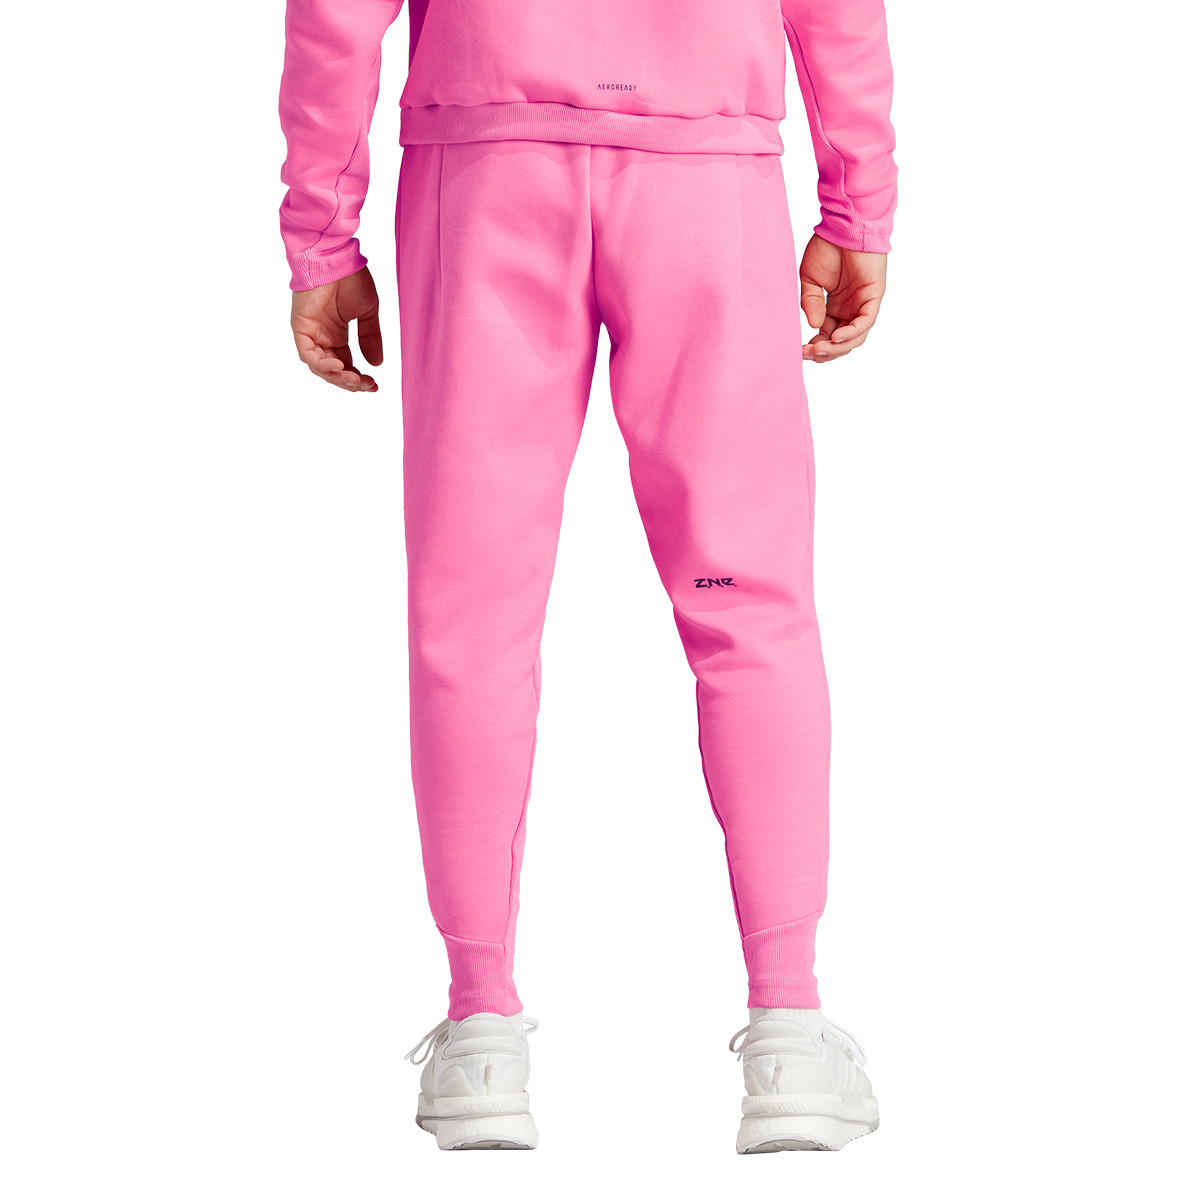 Z.N.E. Pink adidas Print pants Fusion Emotion Fútbol Long -